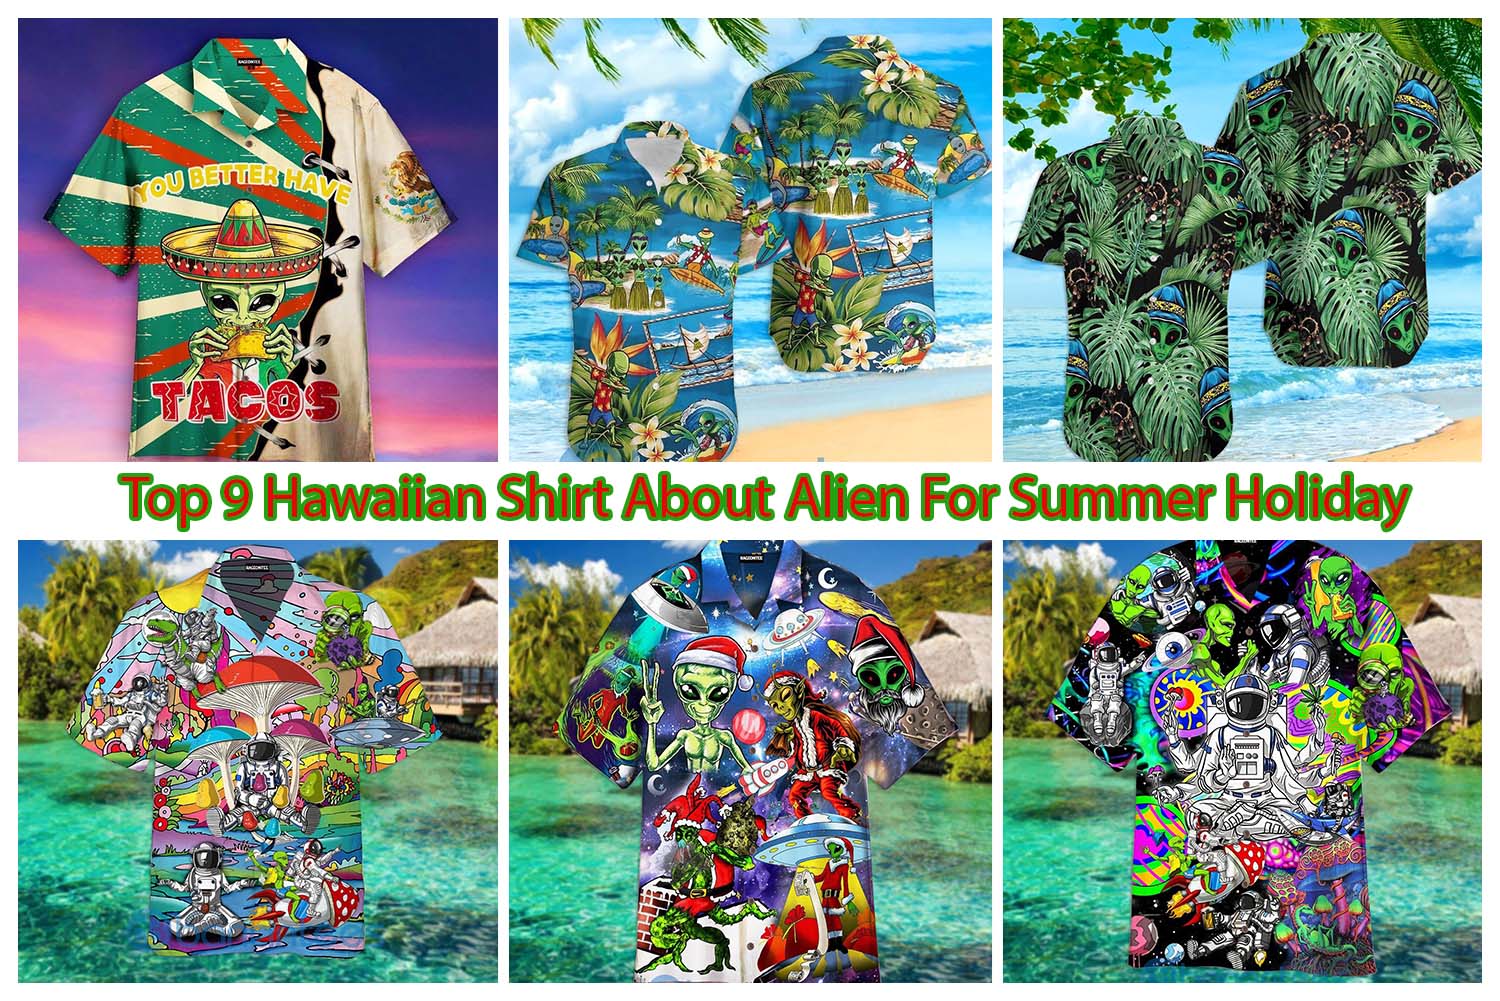 Top 9 Hawaiian Shirt About Alien For Summer Holiday